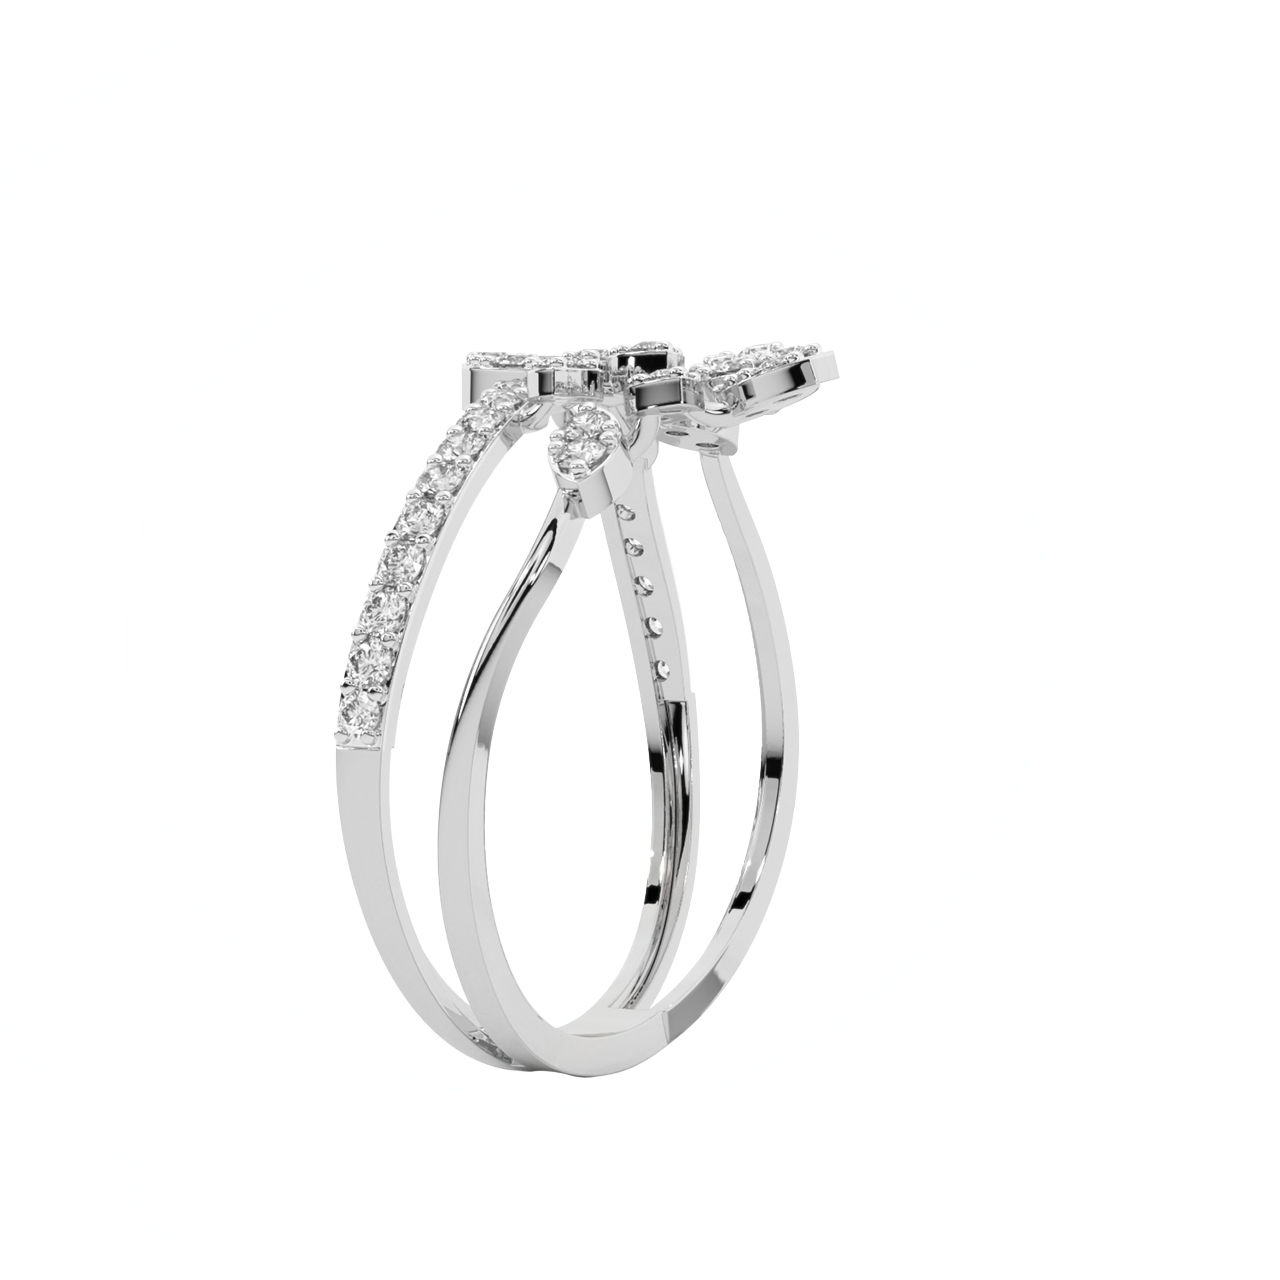 Blooming Floret Diamond Engagement Ring